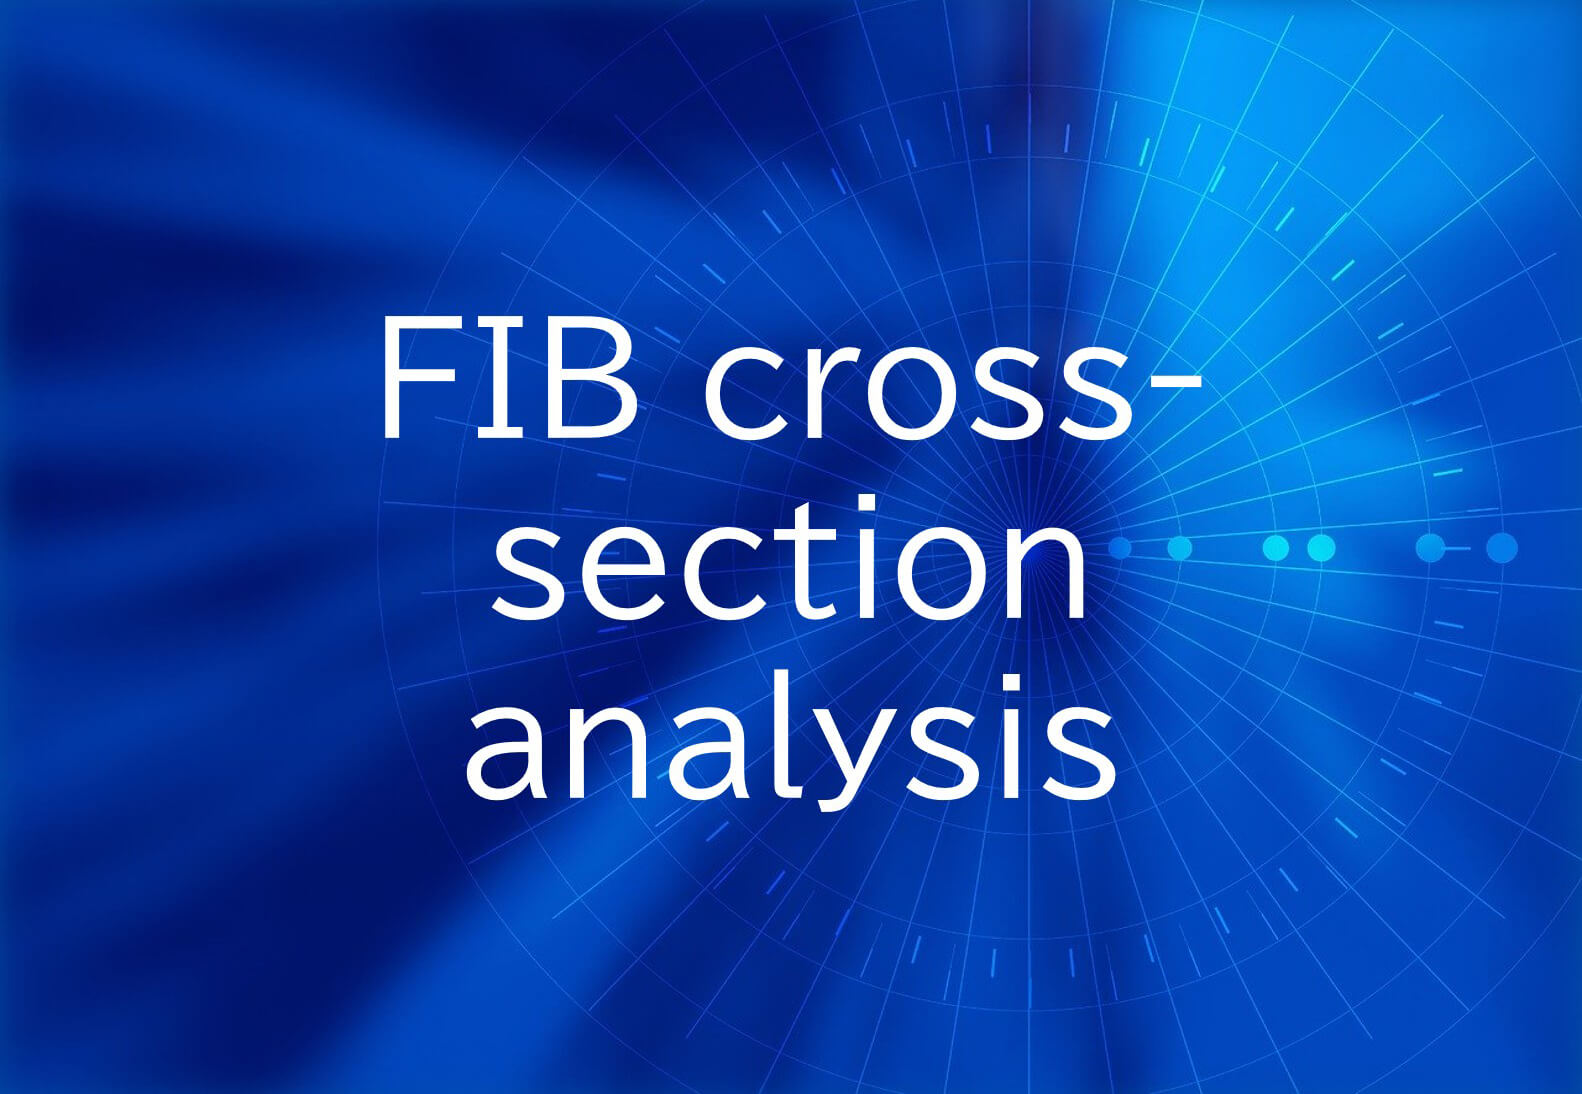 cross-section FIB analysis